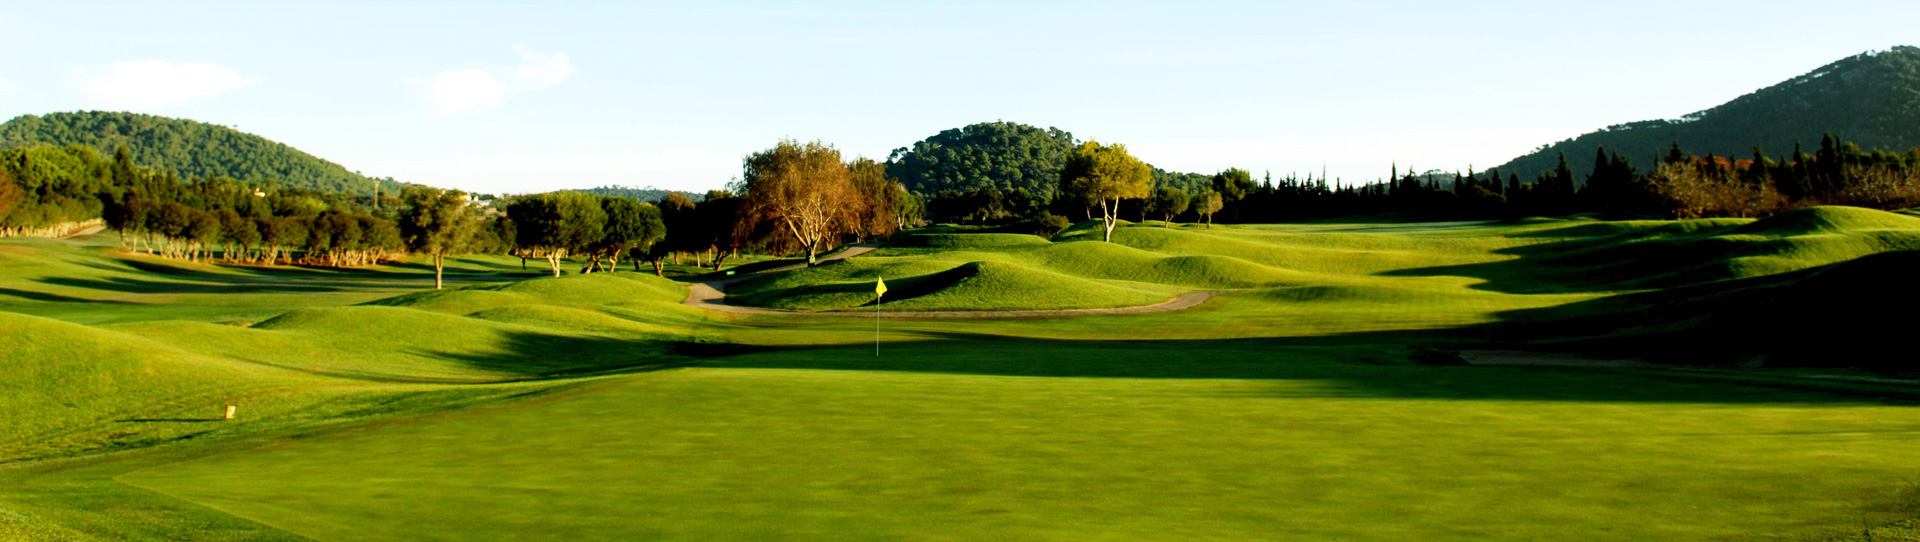 Spain golf courses - Pula Golf Course - Photo 3